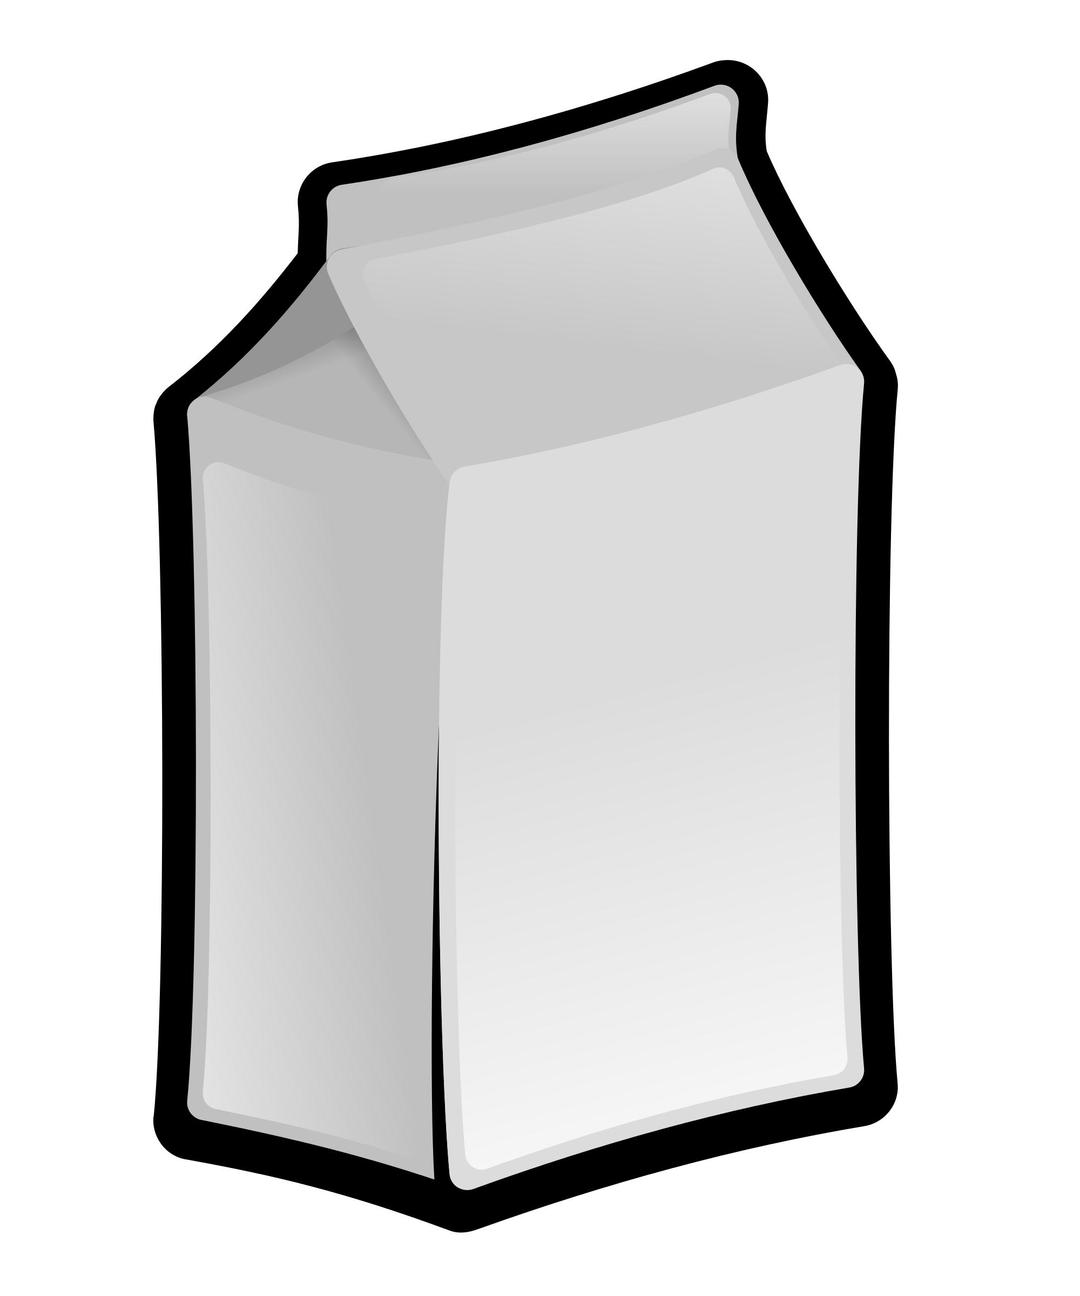 Milk box png transparent